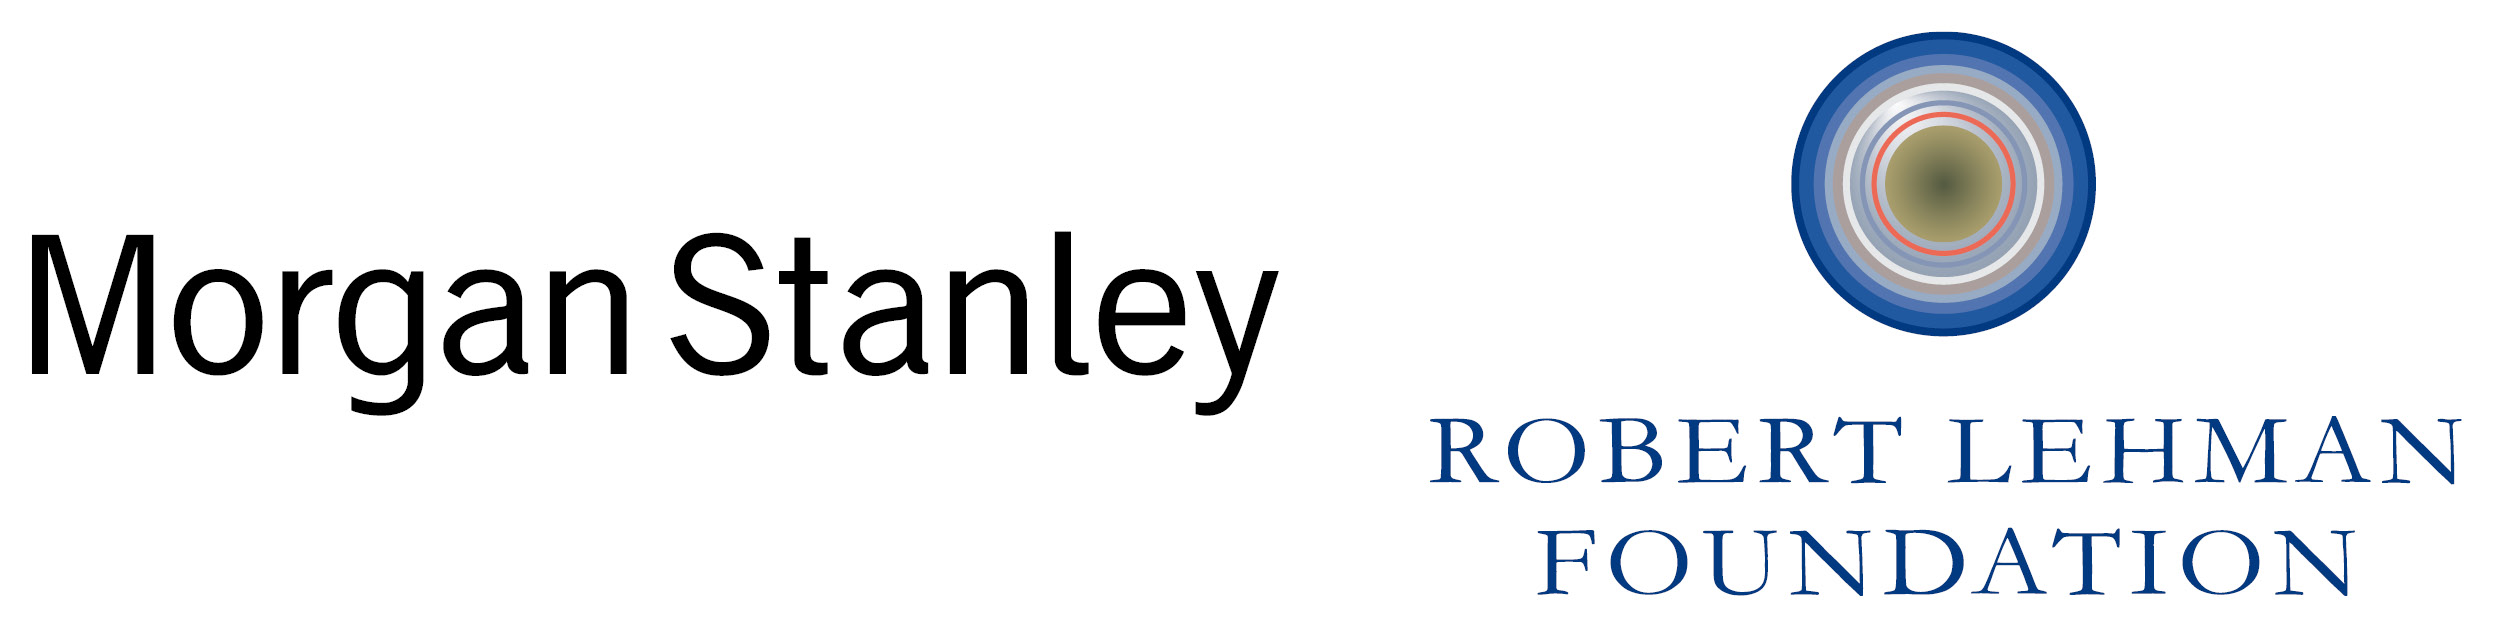 Morgan Stanley and Robert Lehman logo